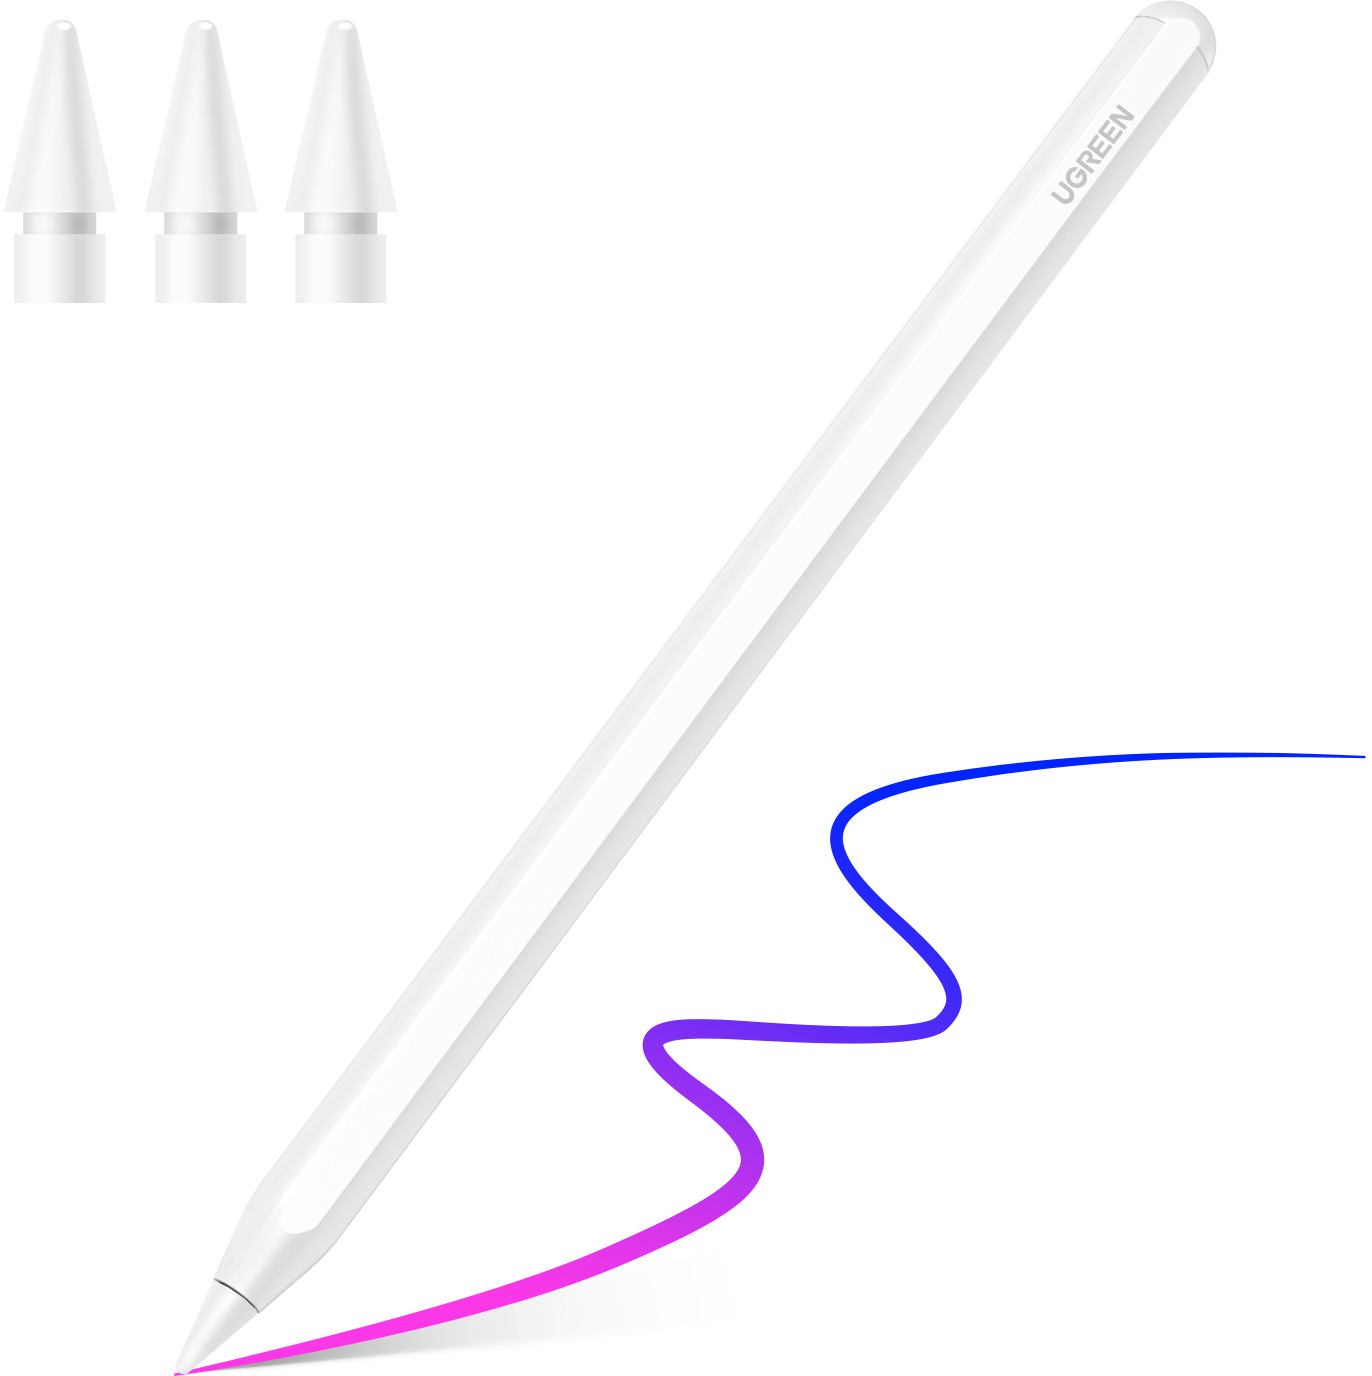 UGREEN Smart Stylus Pen for iPad 15910 Magnetic Charging, White